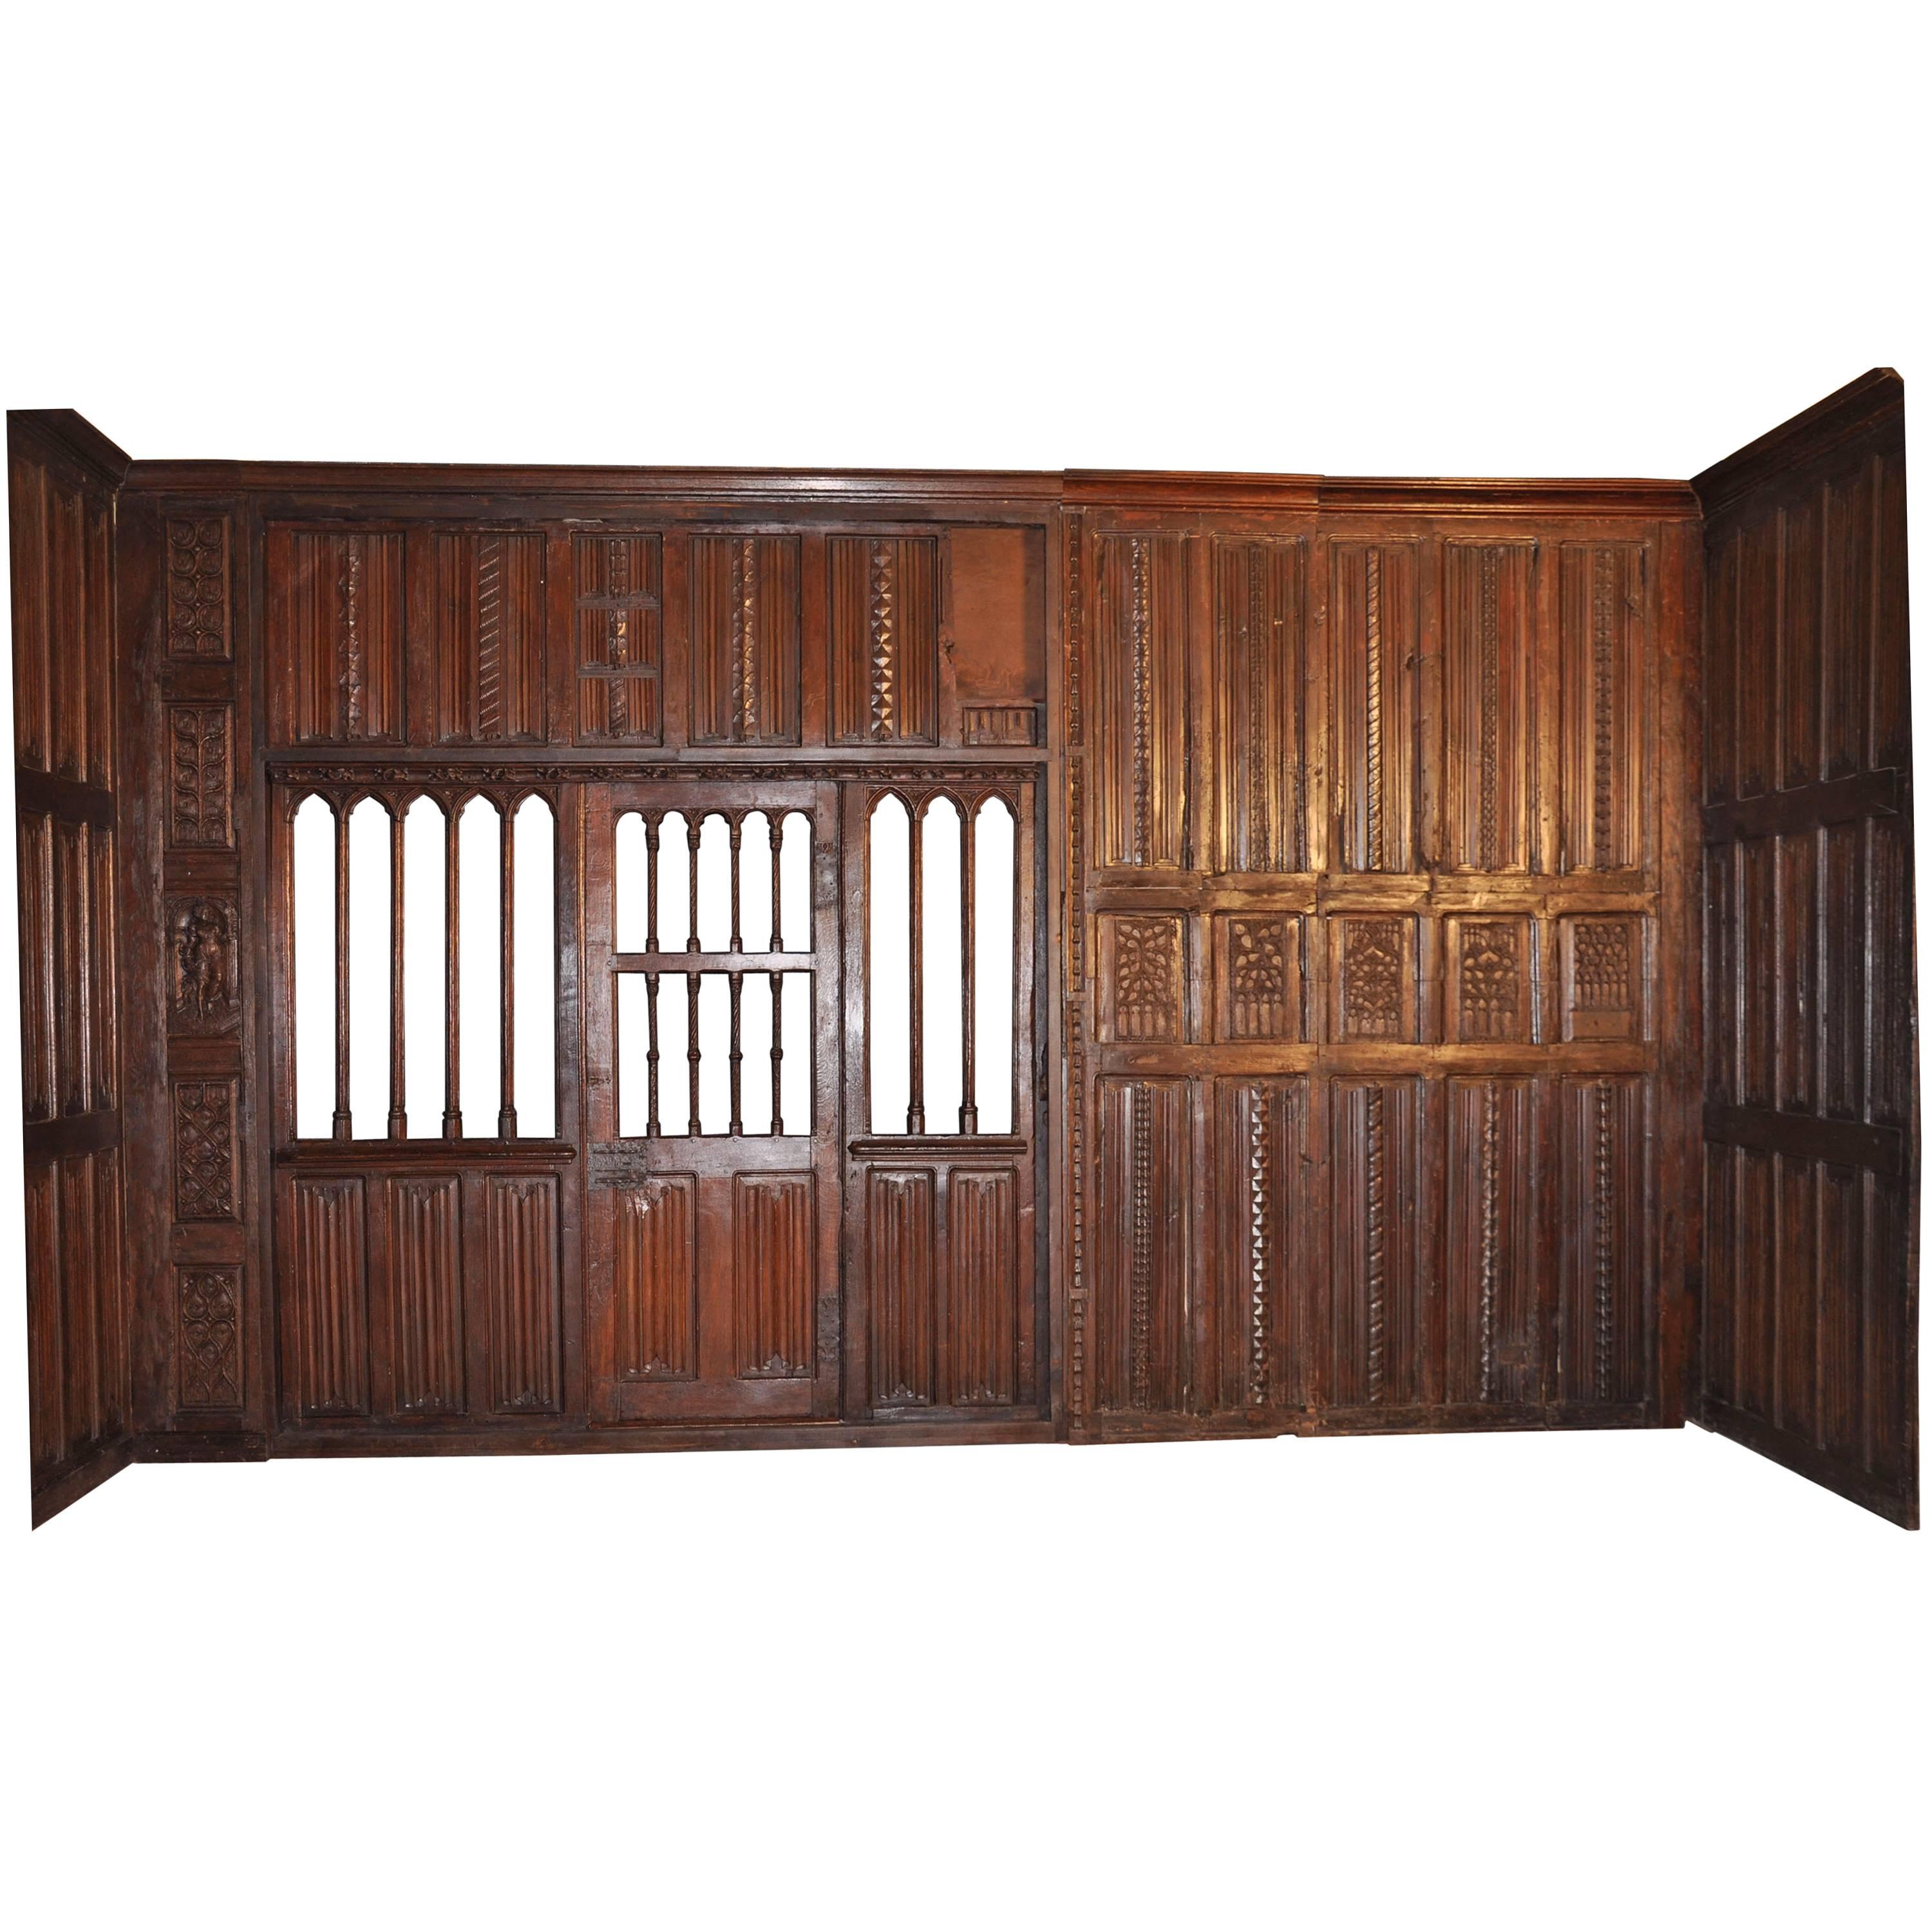 English Renaissance Carved Oak Paneled Room